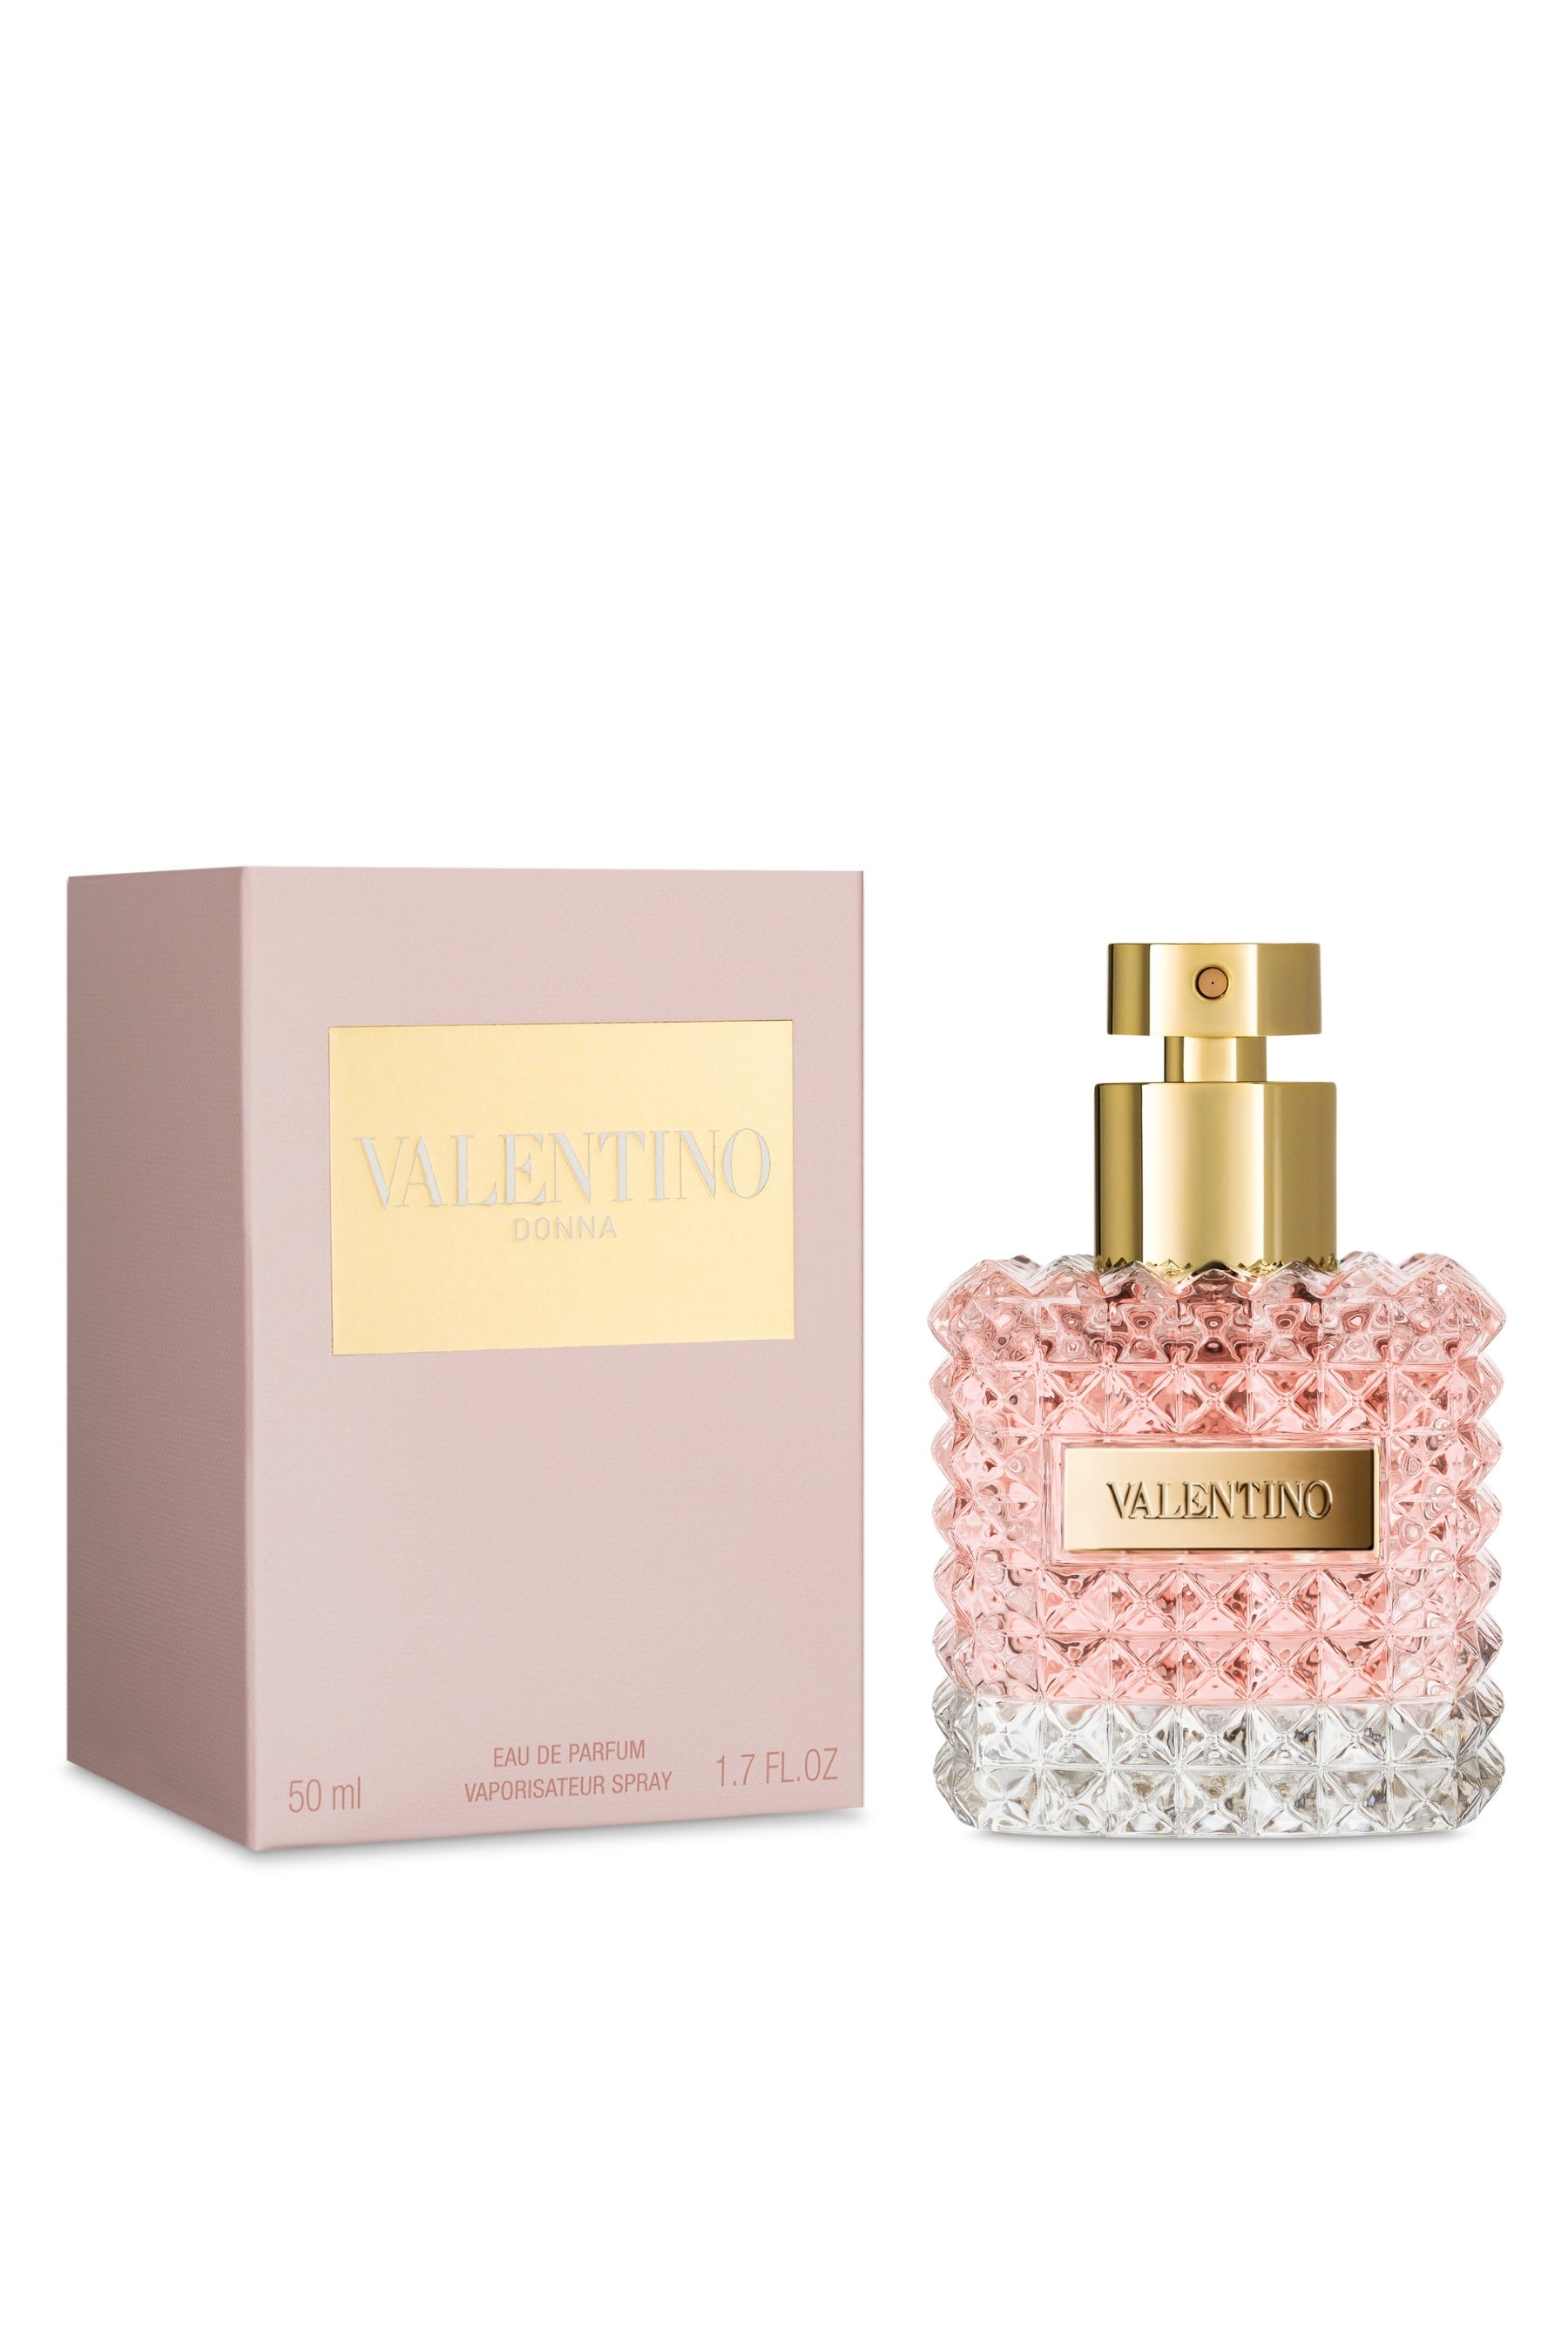 Valentino Donna Eau De Parfum Spray For Women - 1.7 fl oz bottle